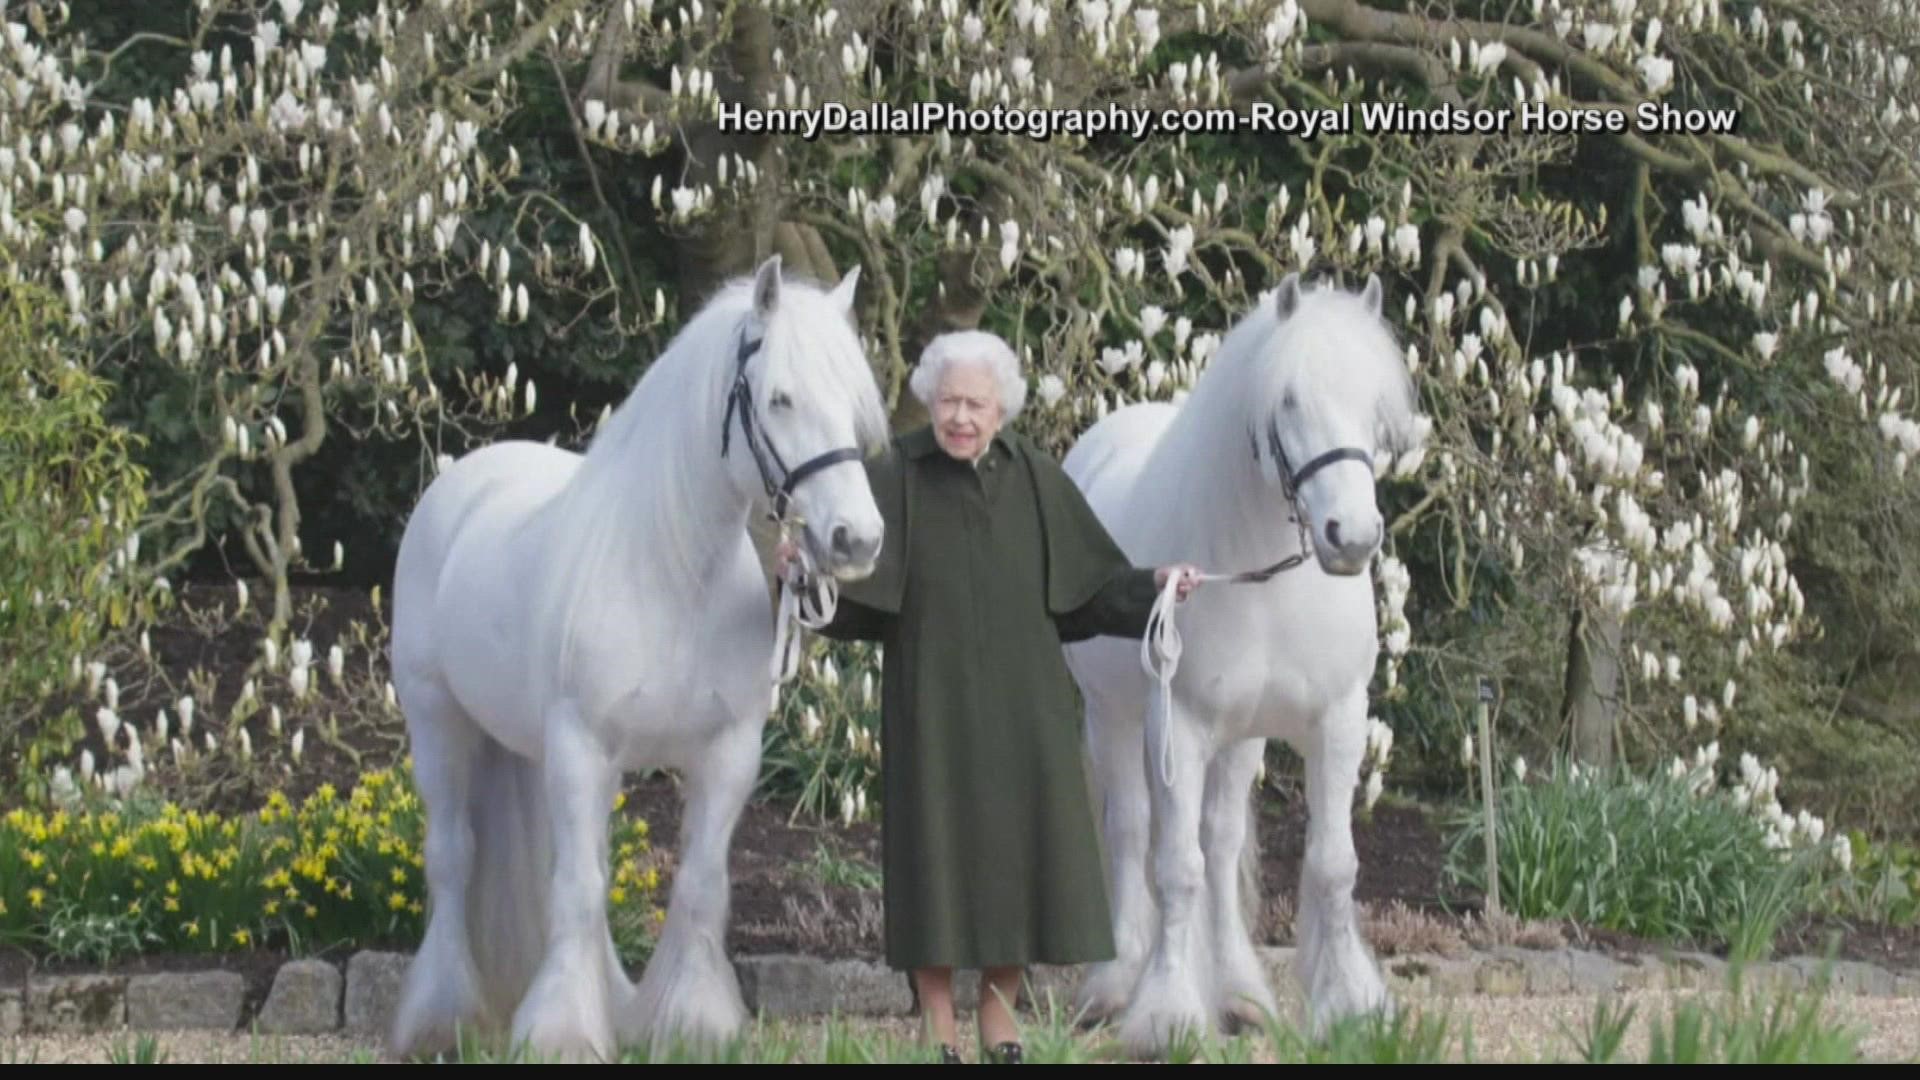 Queen Elizabeth is celebrating her 96th birthday today.